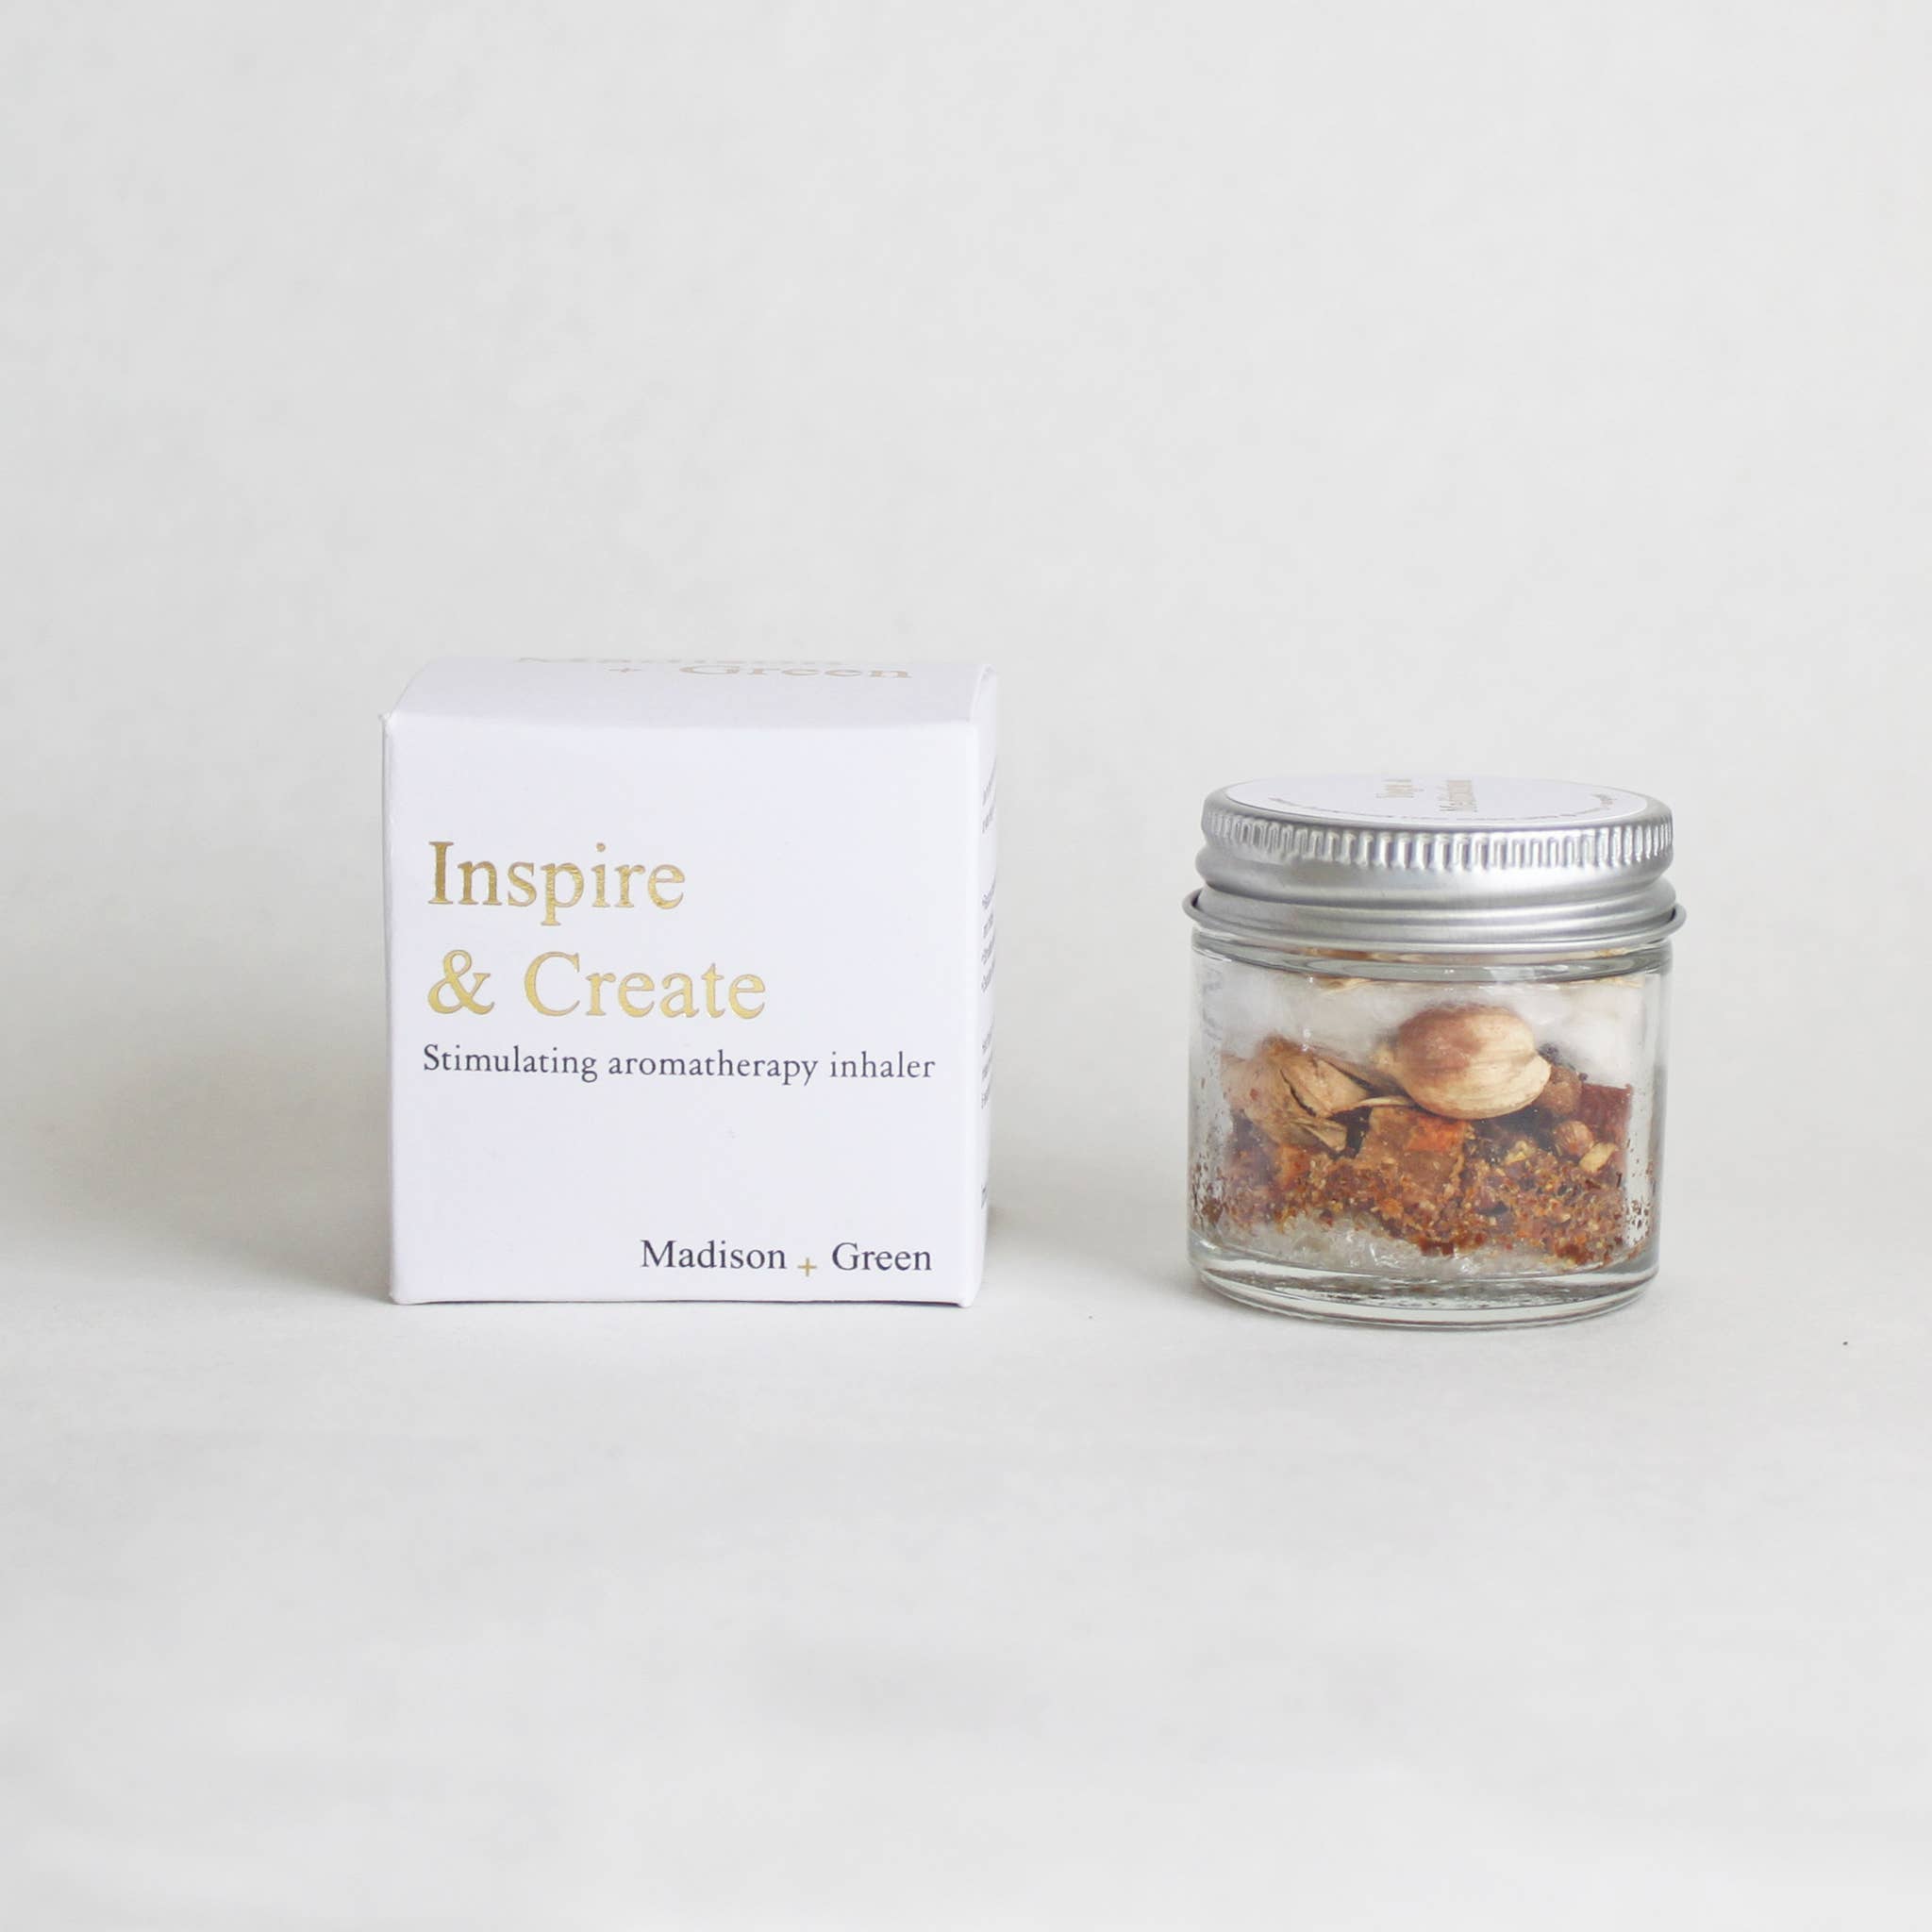 "Inspire & Create" - Creativity Boost Aromatherapy Inhaler